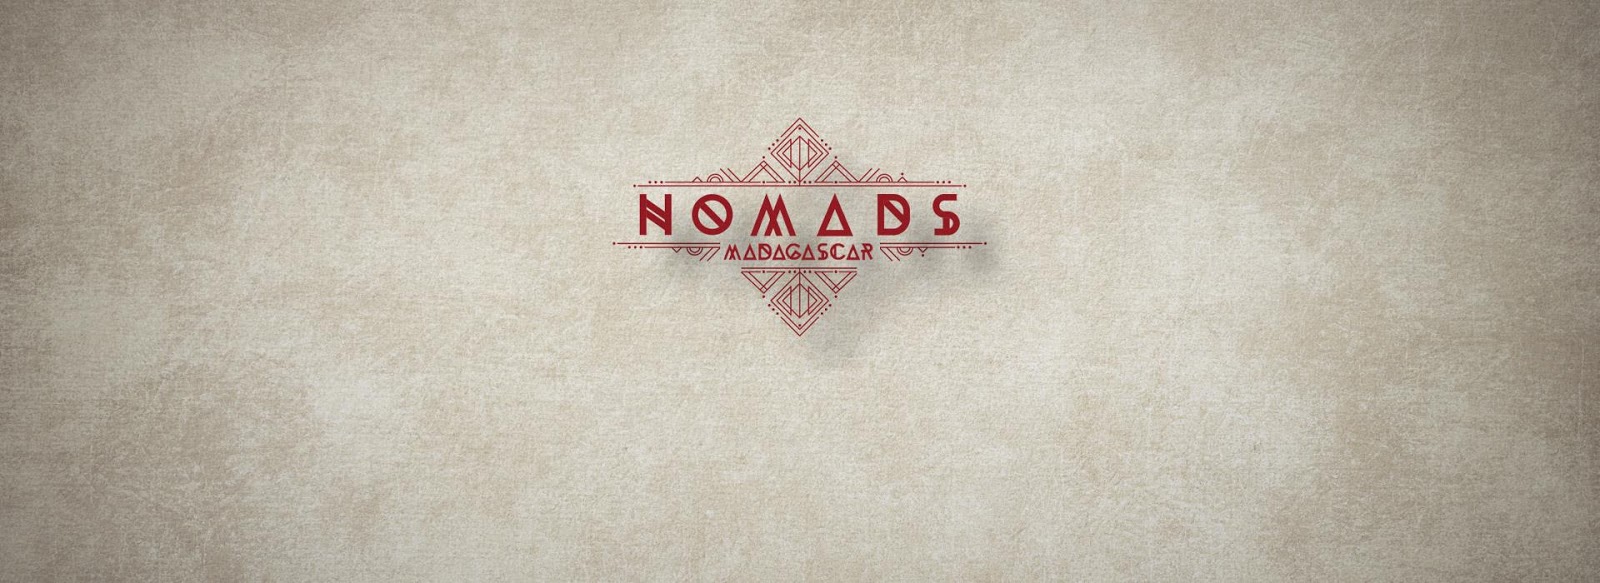 Nomads 2: Τα πρώτα ονόματα για το ριάλιτι - Ποιοι πέρασαν το κατώφλι του ΑΝΤ1; - Φωτογραφία 1